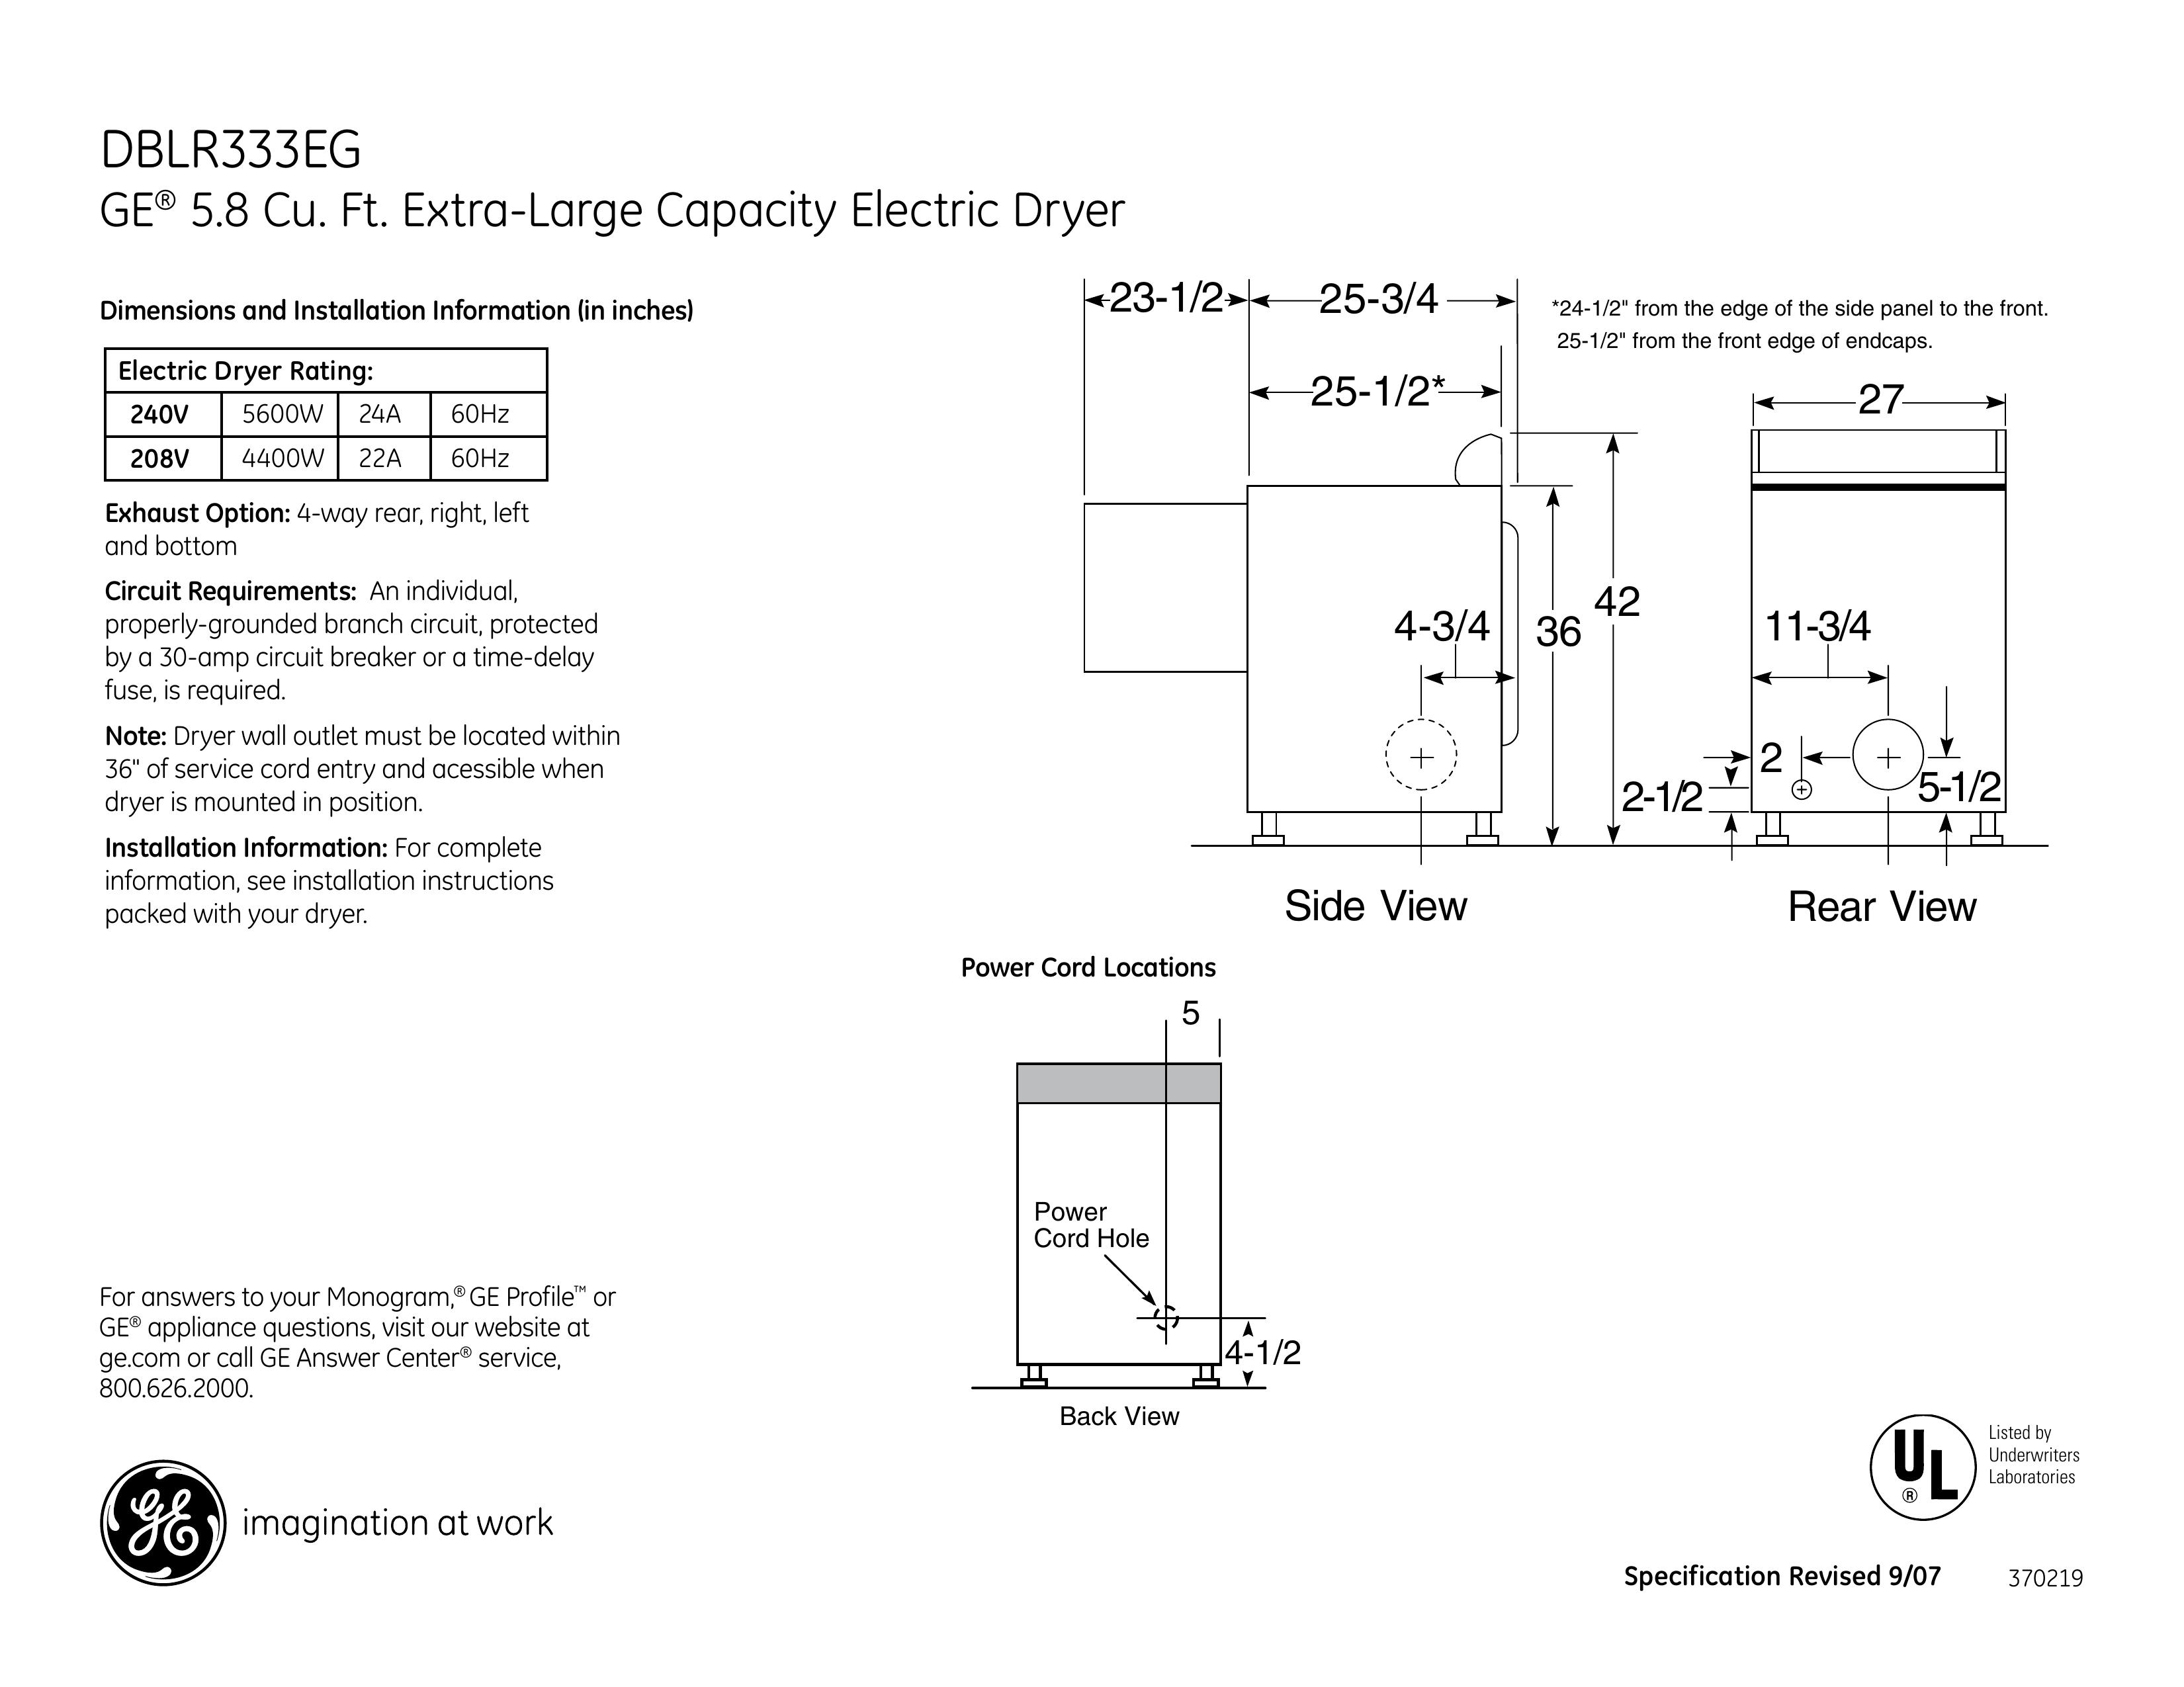 GE DBLR333EGWW Clothes Dryer User Manual